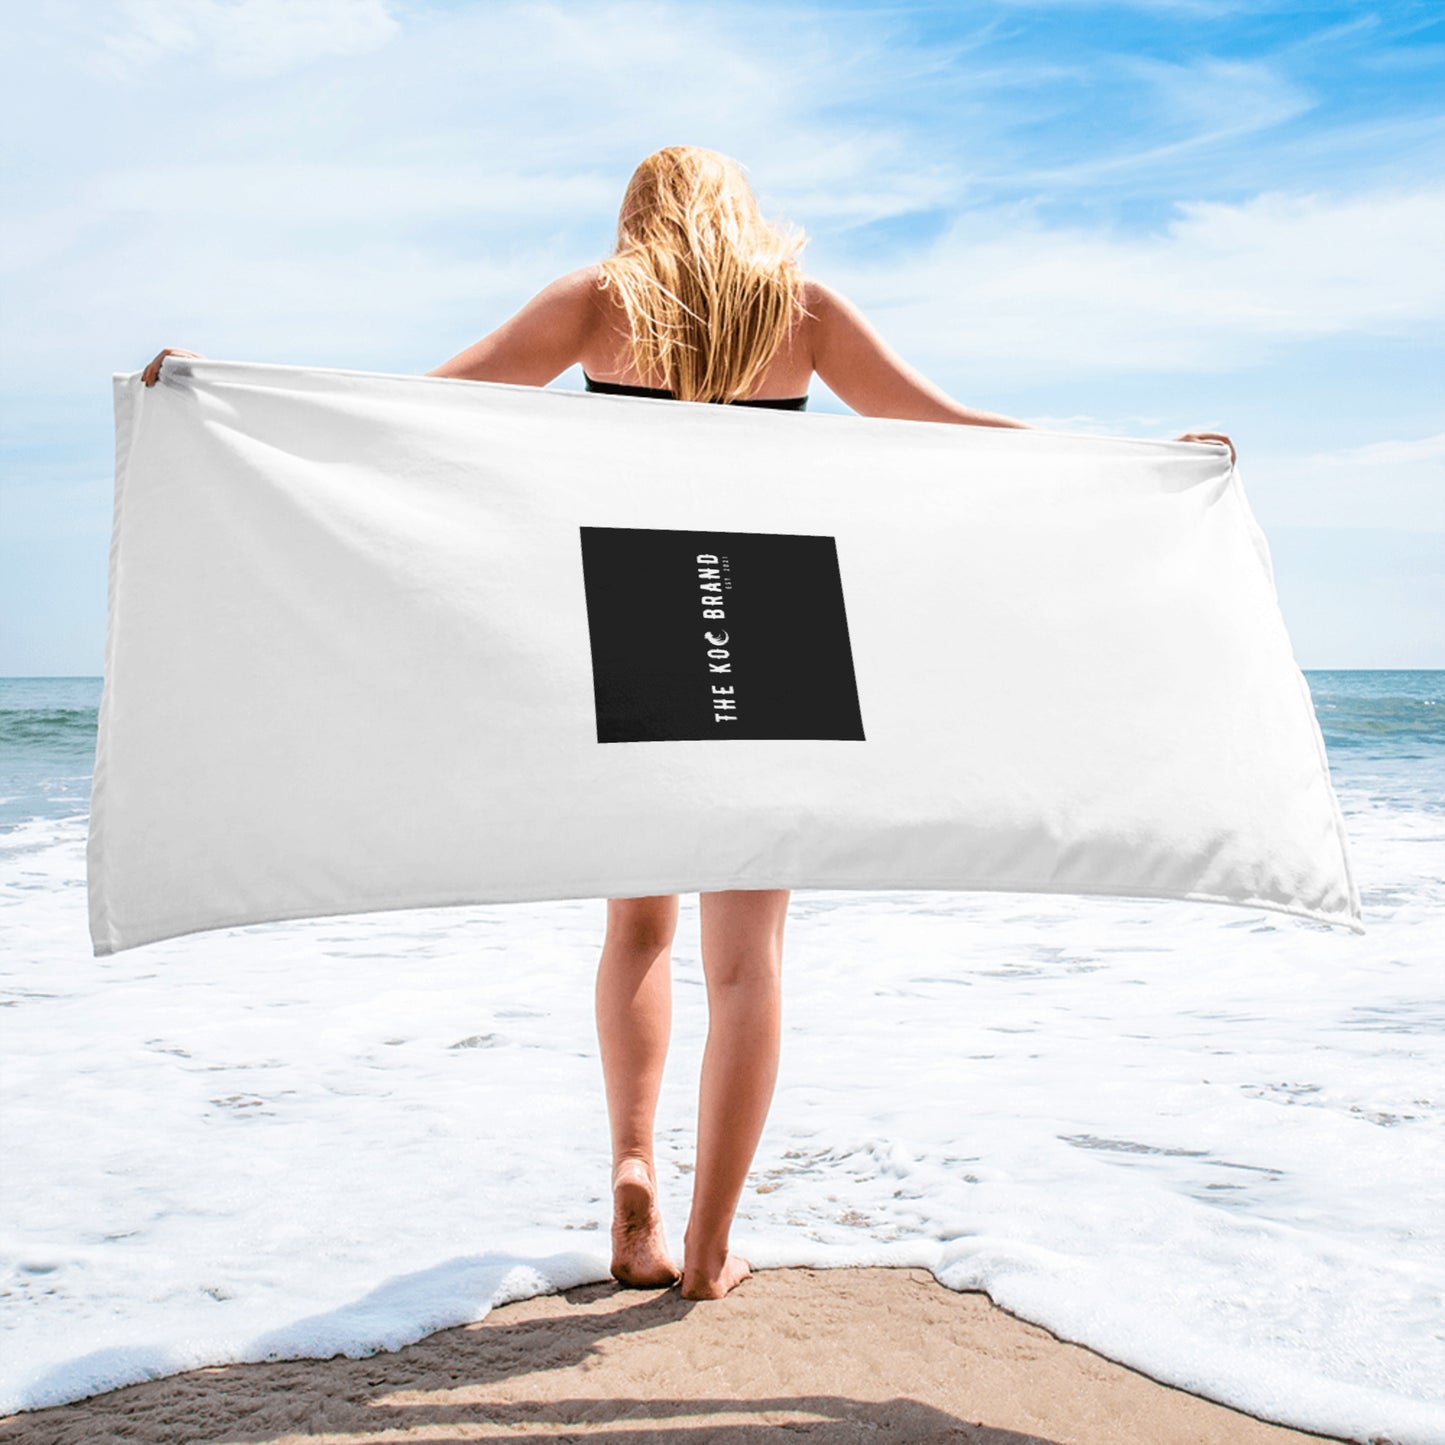 The KOC Brand Beach  Towel